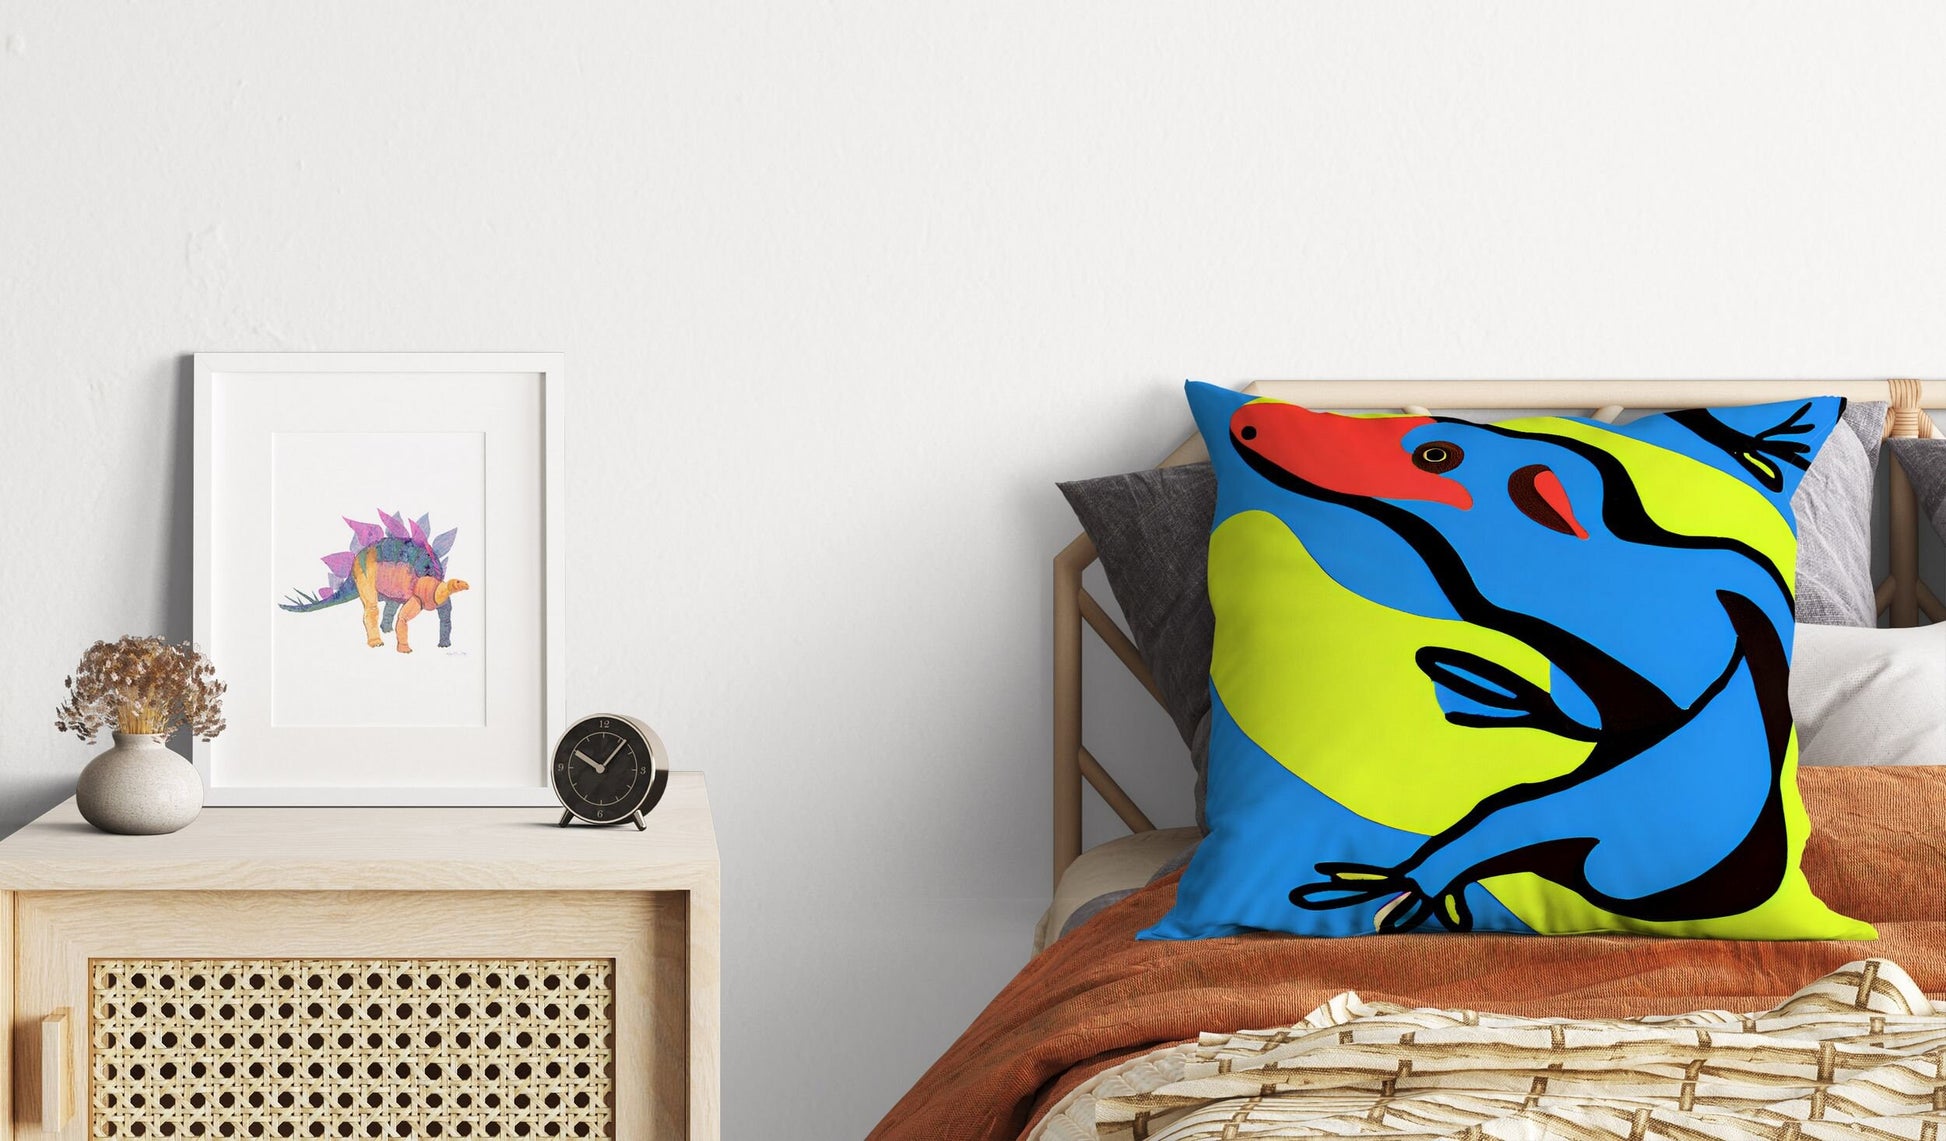 Australian Wildlife Platypus Original Art Tapestry Pillows, Abstract Pillow Case, Designer Pillow, Colorful Pillow Case, Modern Pillow